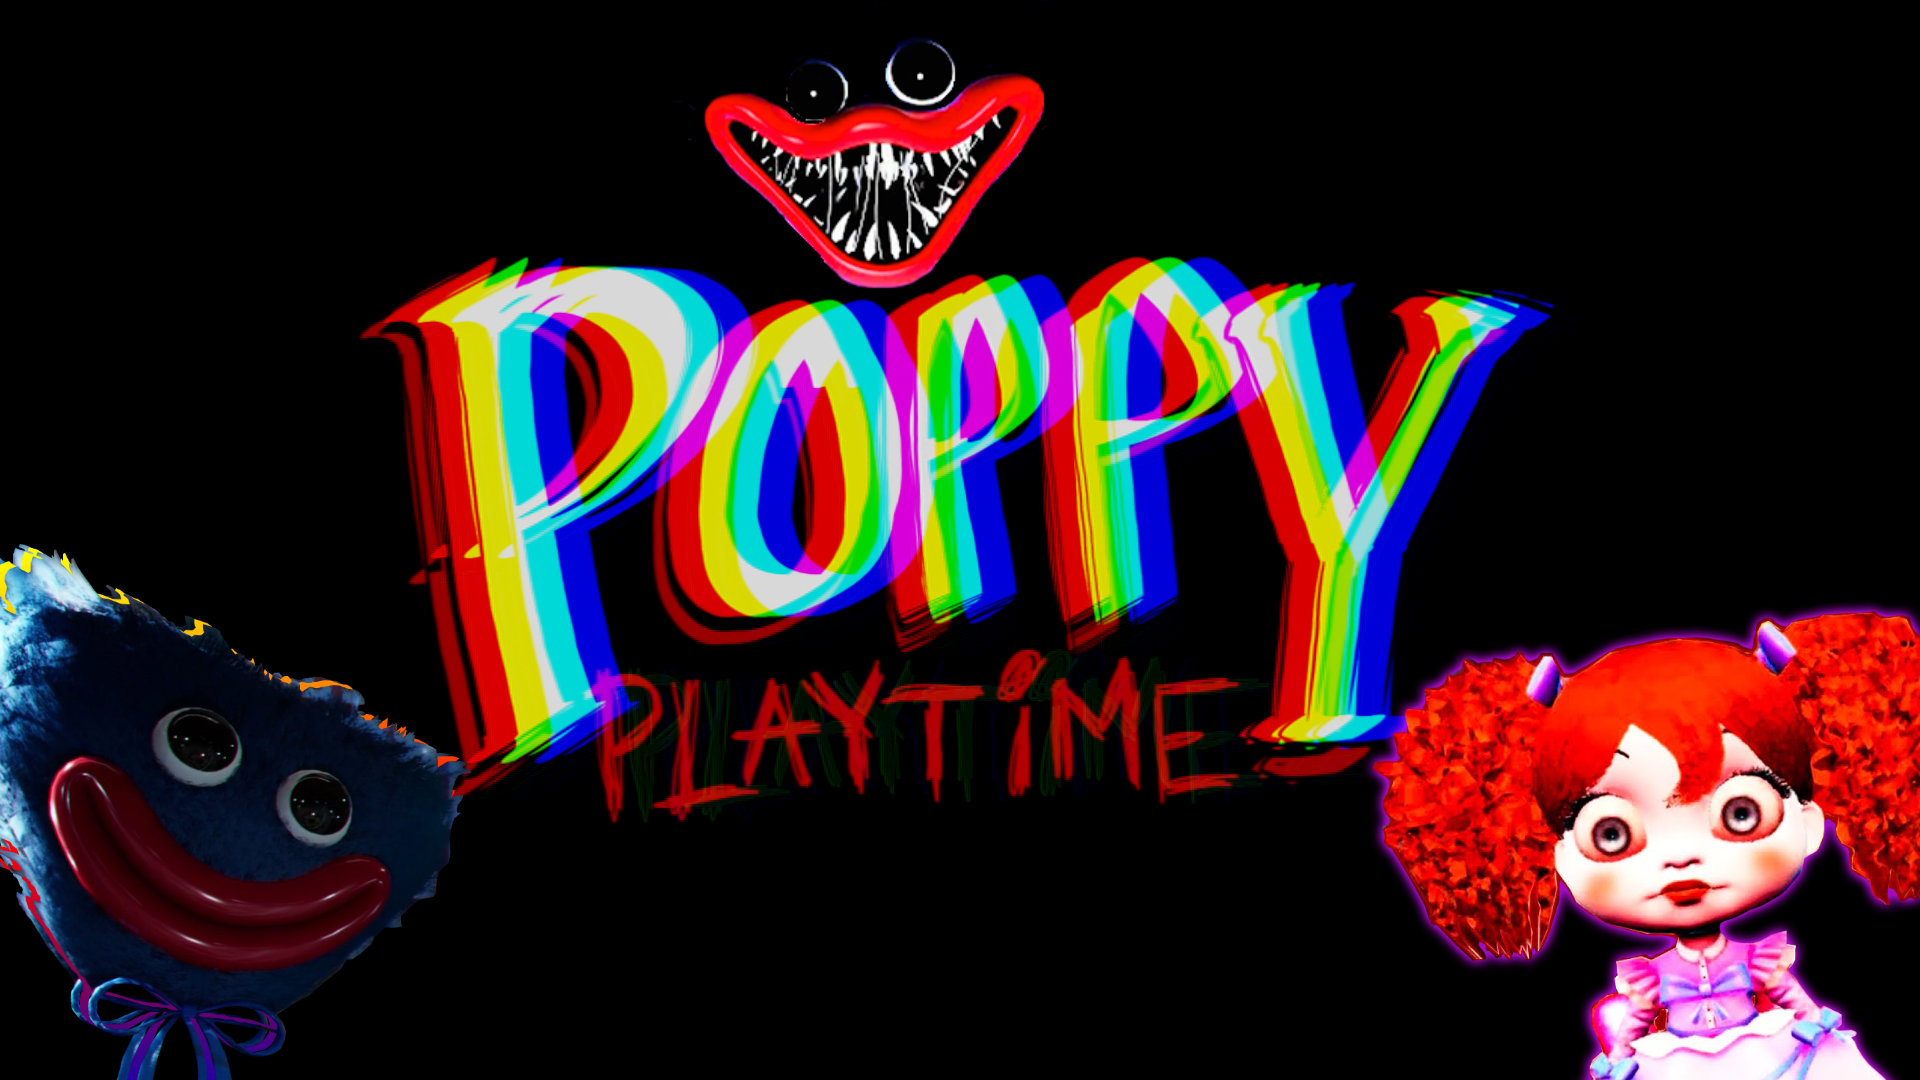 Poppy play time на русском. Поппи Плэйтайм. Поппи плей тайм Поппи. Poppy Playtime надпись. Логотип Поппи плей тайм.